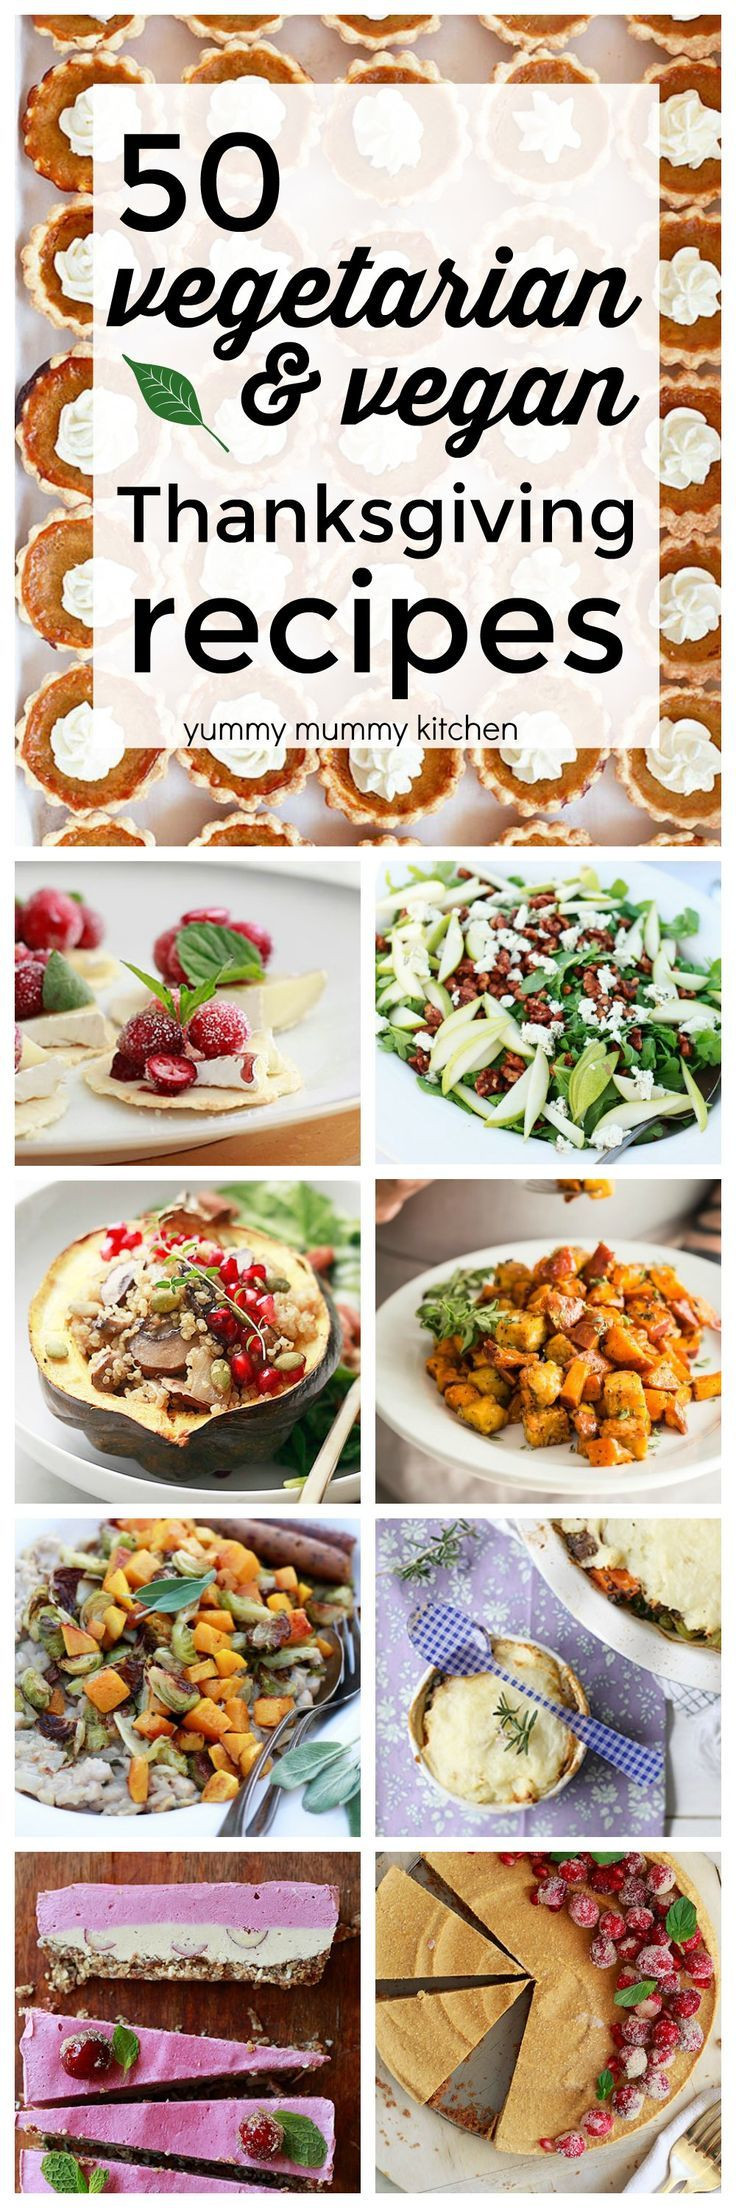 Thanksgiving Dinner Ideas Pinterest
 Best 25 Thanksgiving dinner recipes ideas on Pinterest